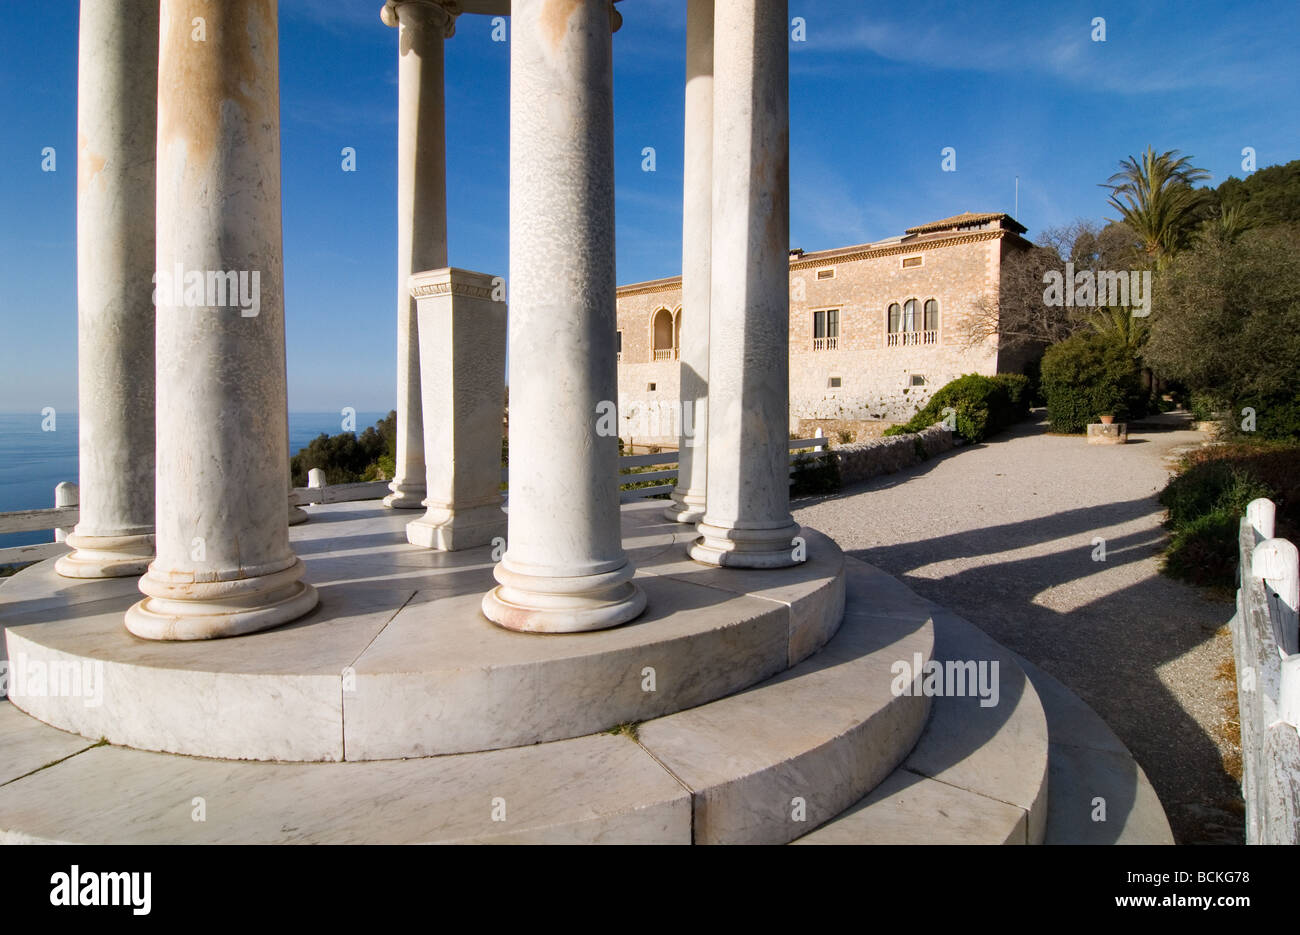 The mansion Son Marroig near Valldemossa, Mallorca, Spain. Stock Photo